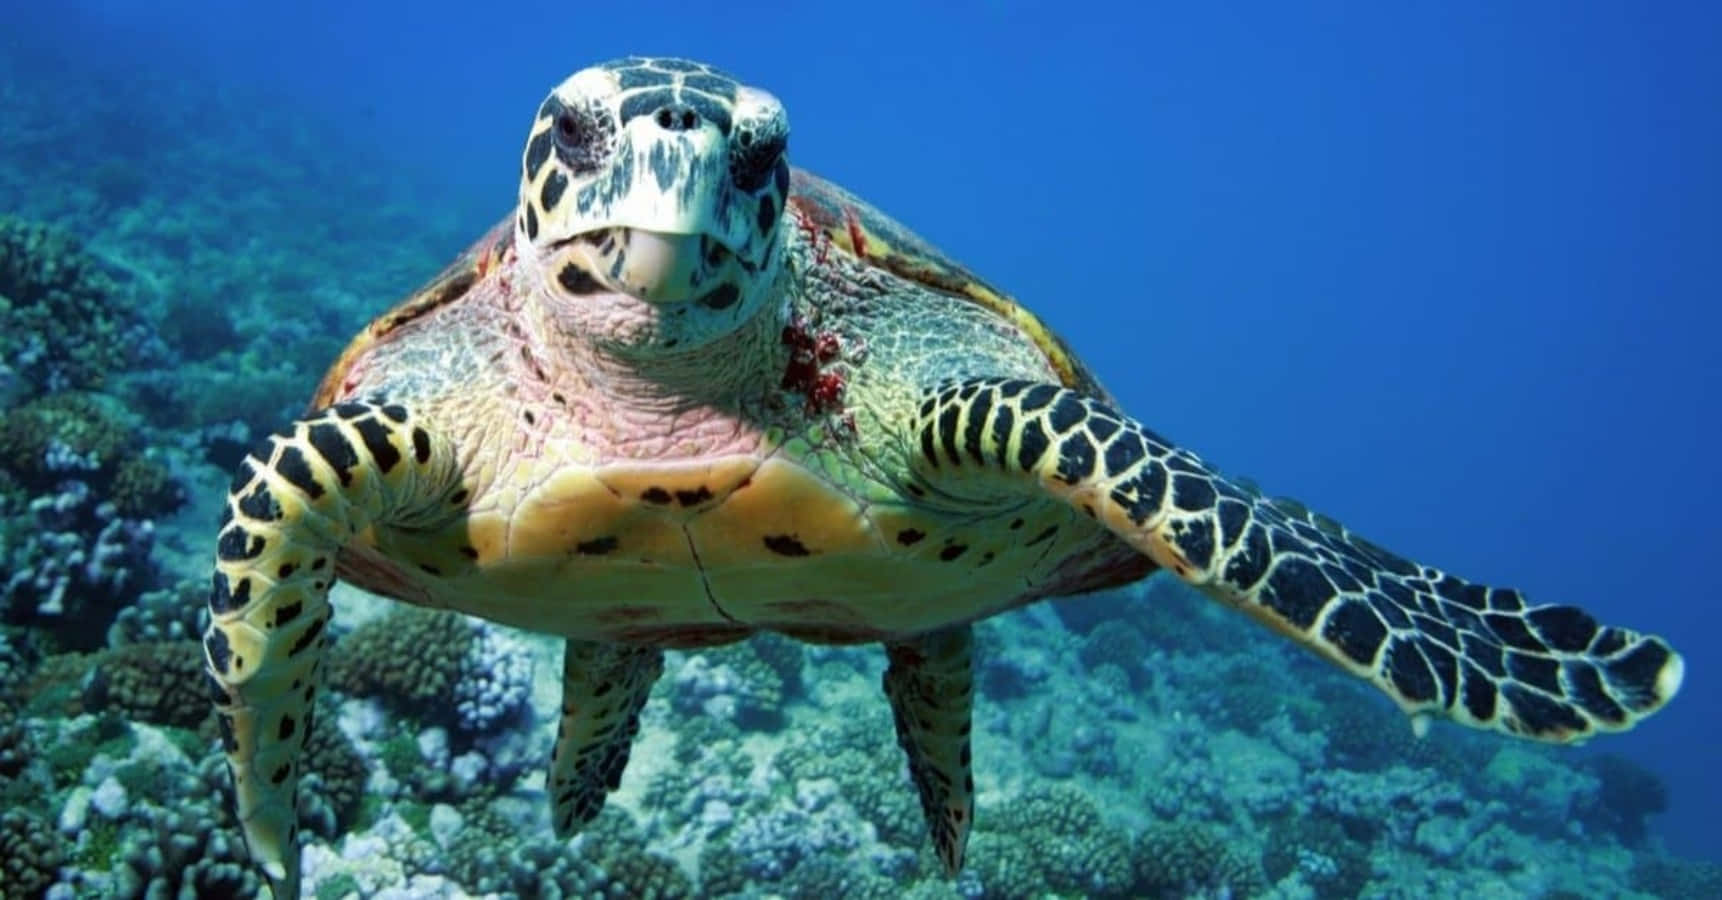 Umatartaruga Verde Nadando No Oceano.